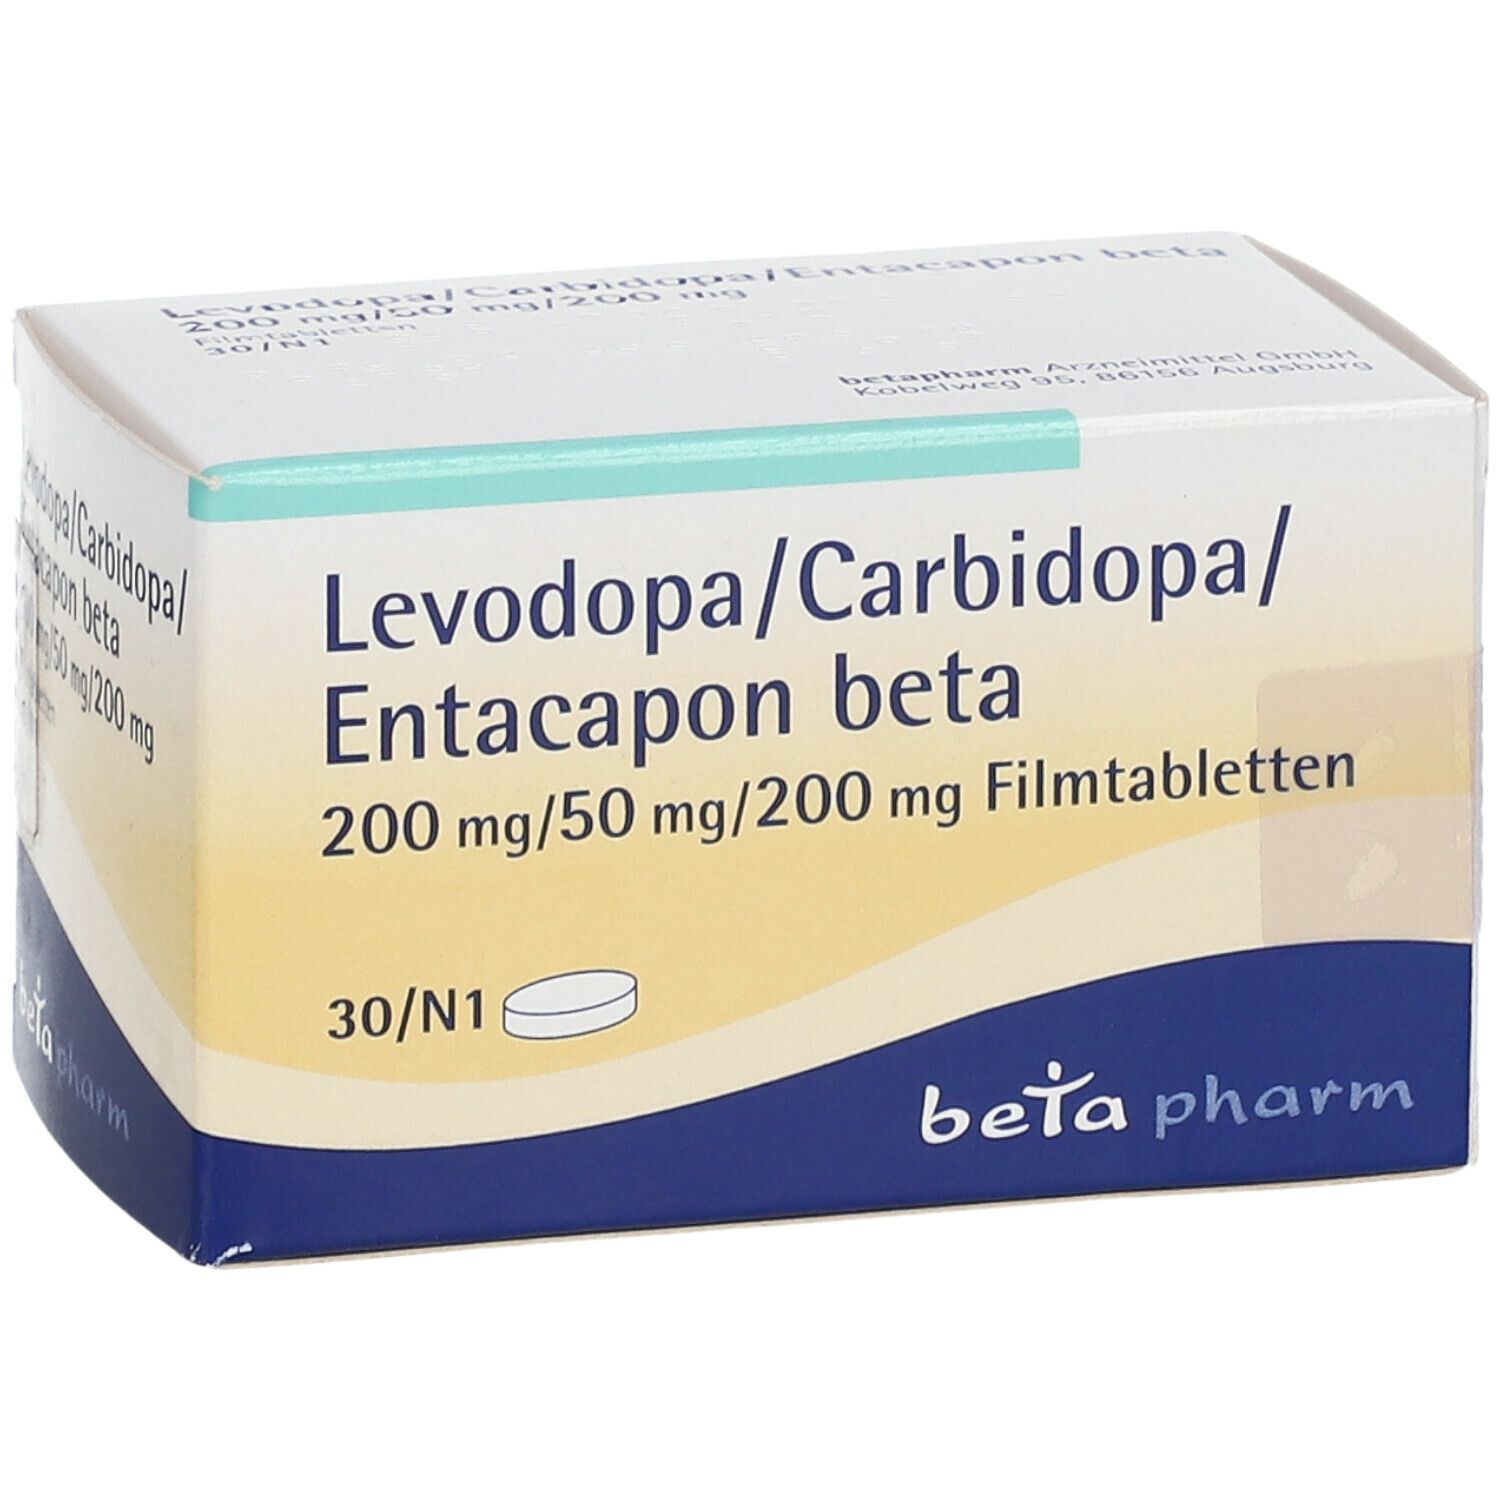 Levodopa/Carbidopa/Entacapon beta 200 mg/50 mg/200 mg